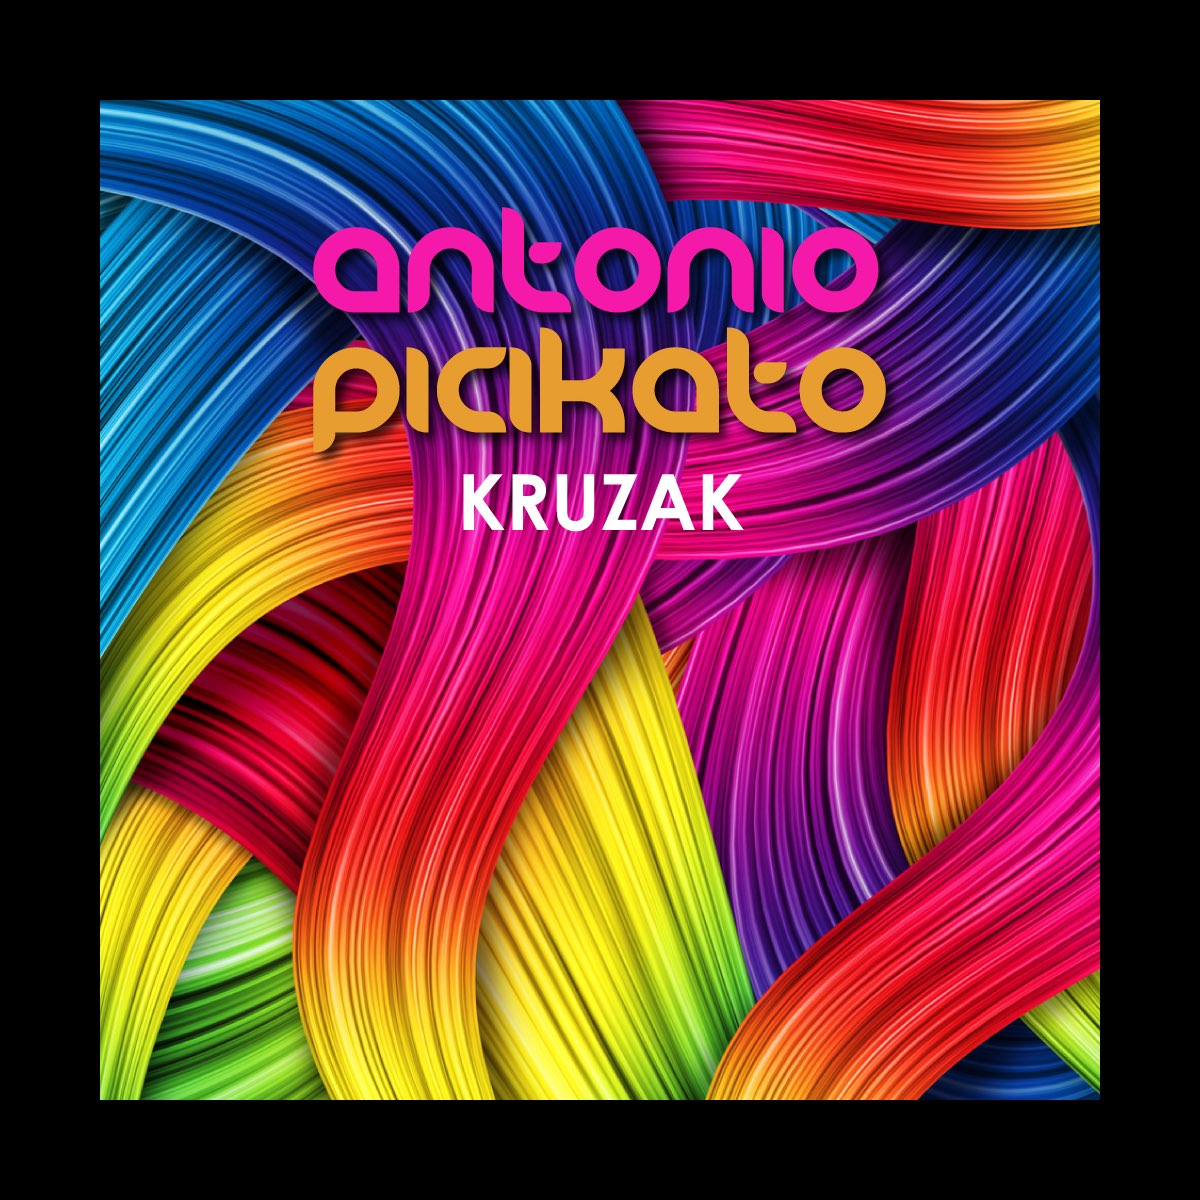 Kruzak - Single by Antonio Picikato on Apple Music